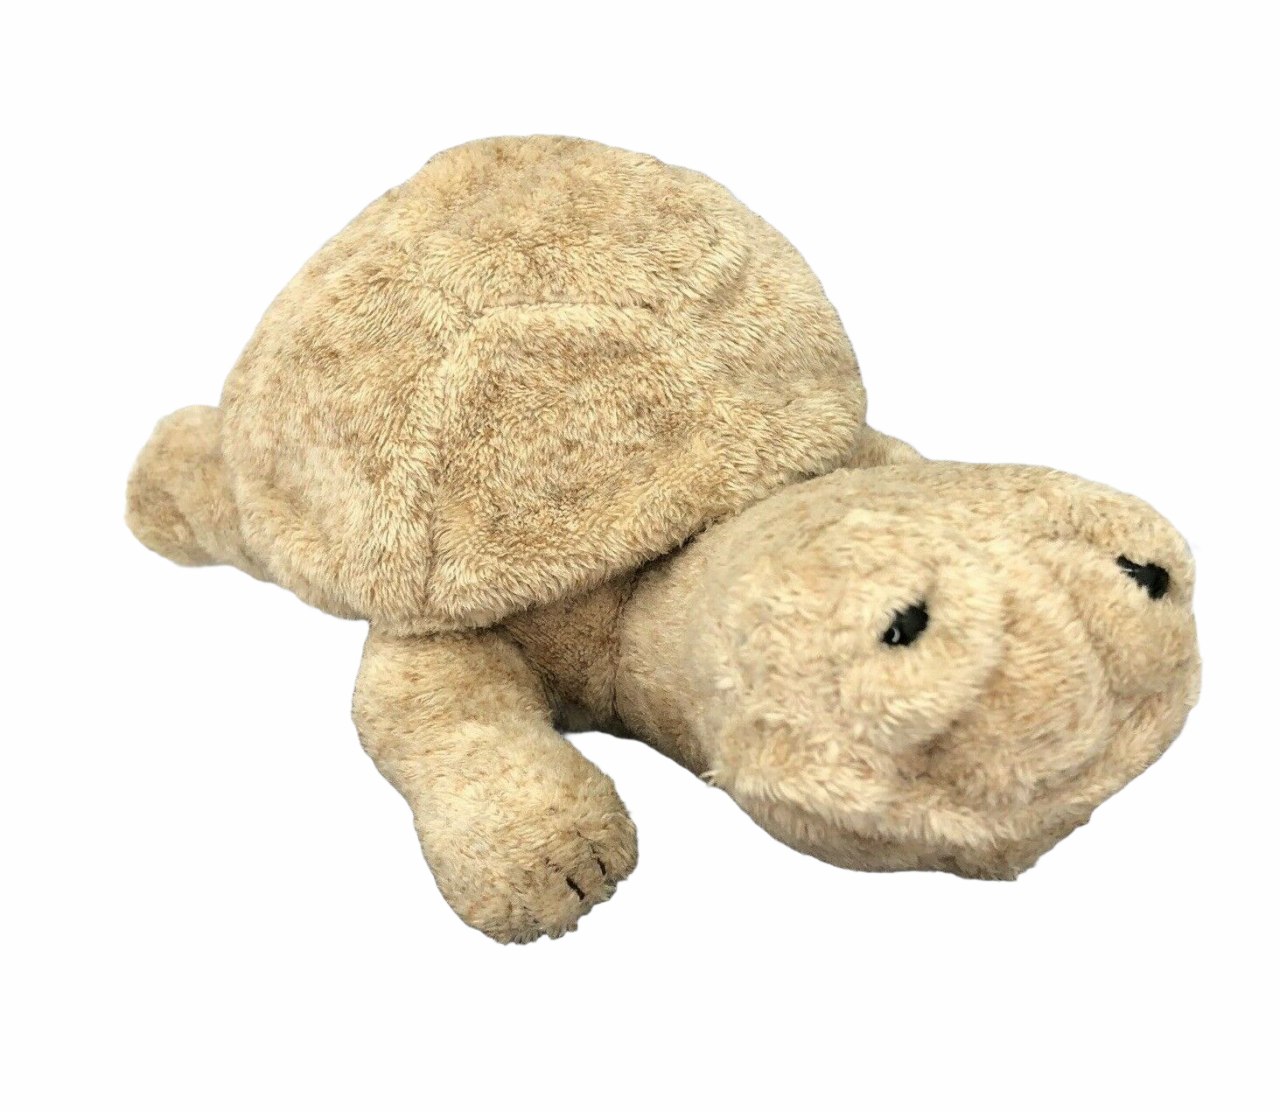 Cuddly Quarry Critters Wrinkled Face Tortoise #plush#plushie#plushies#plushblr#plushcore#toycore#soft toy#stuffies #cuddly quarry critters #turtle#tortoise#plush: turtle #poor little old man